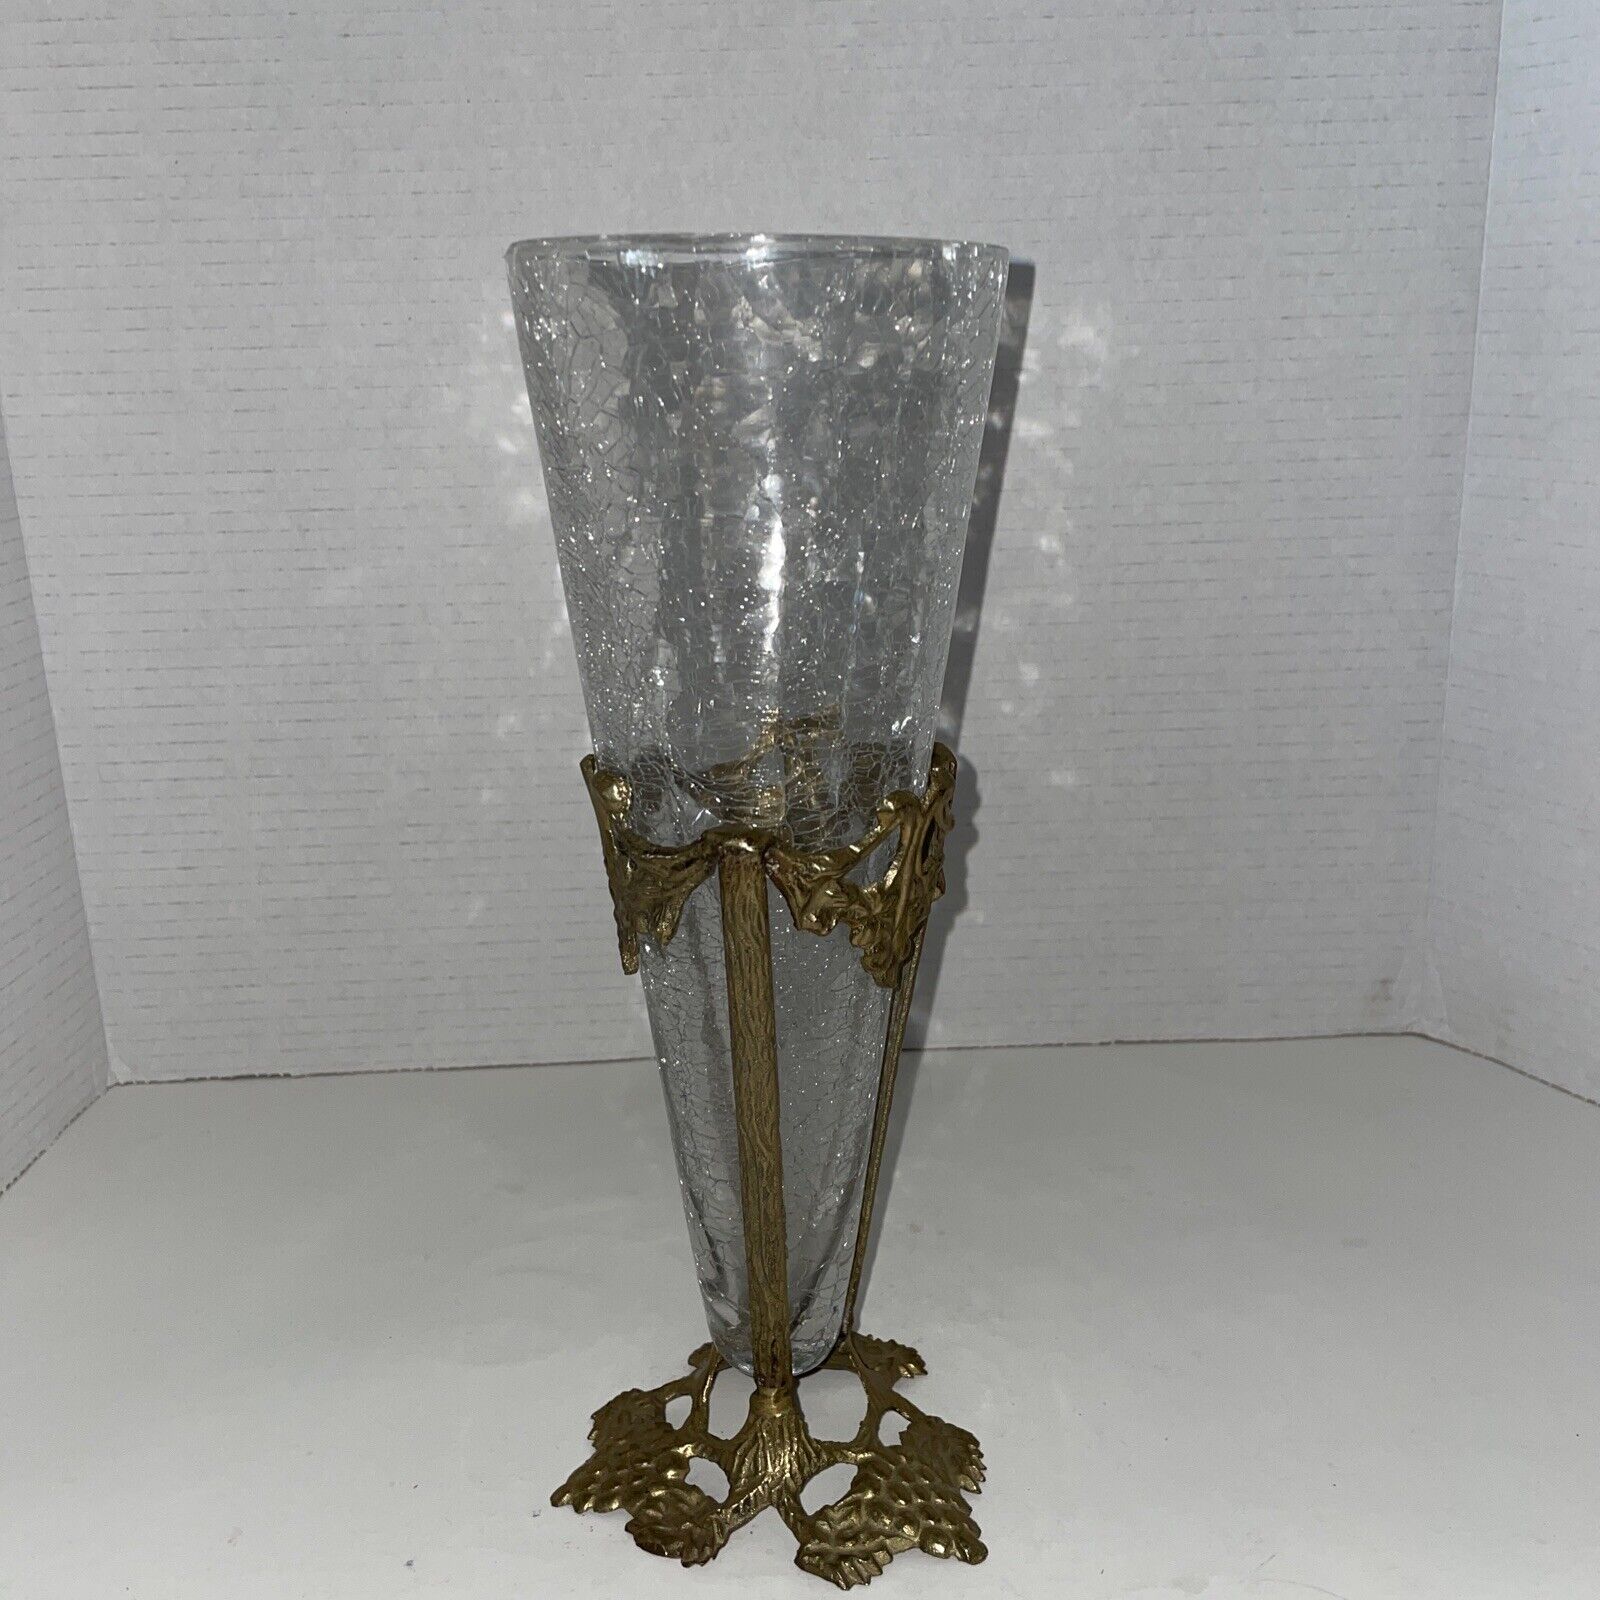 Vintage Crackle Glass Vase With Brass Pedestal Stand Grape Clusters 11”